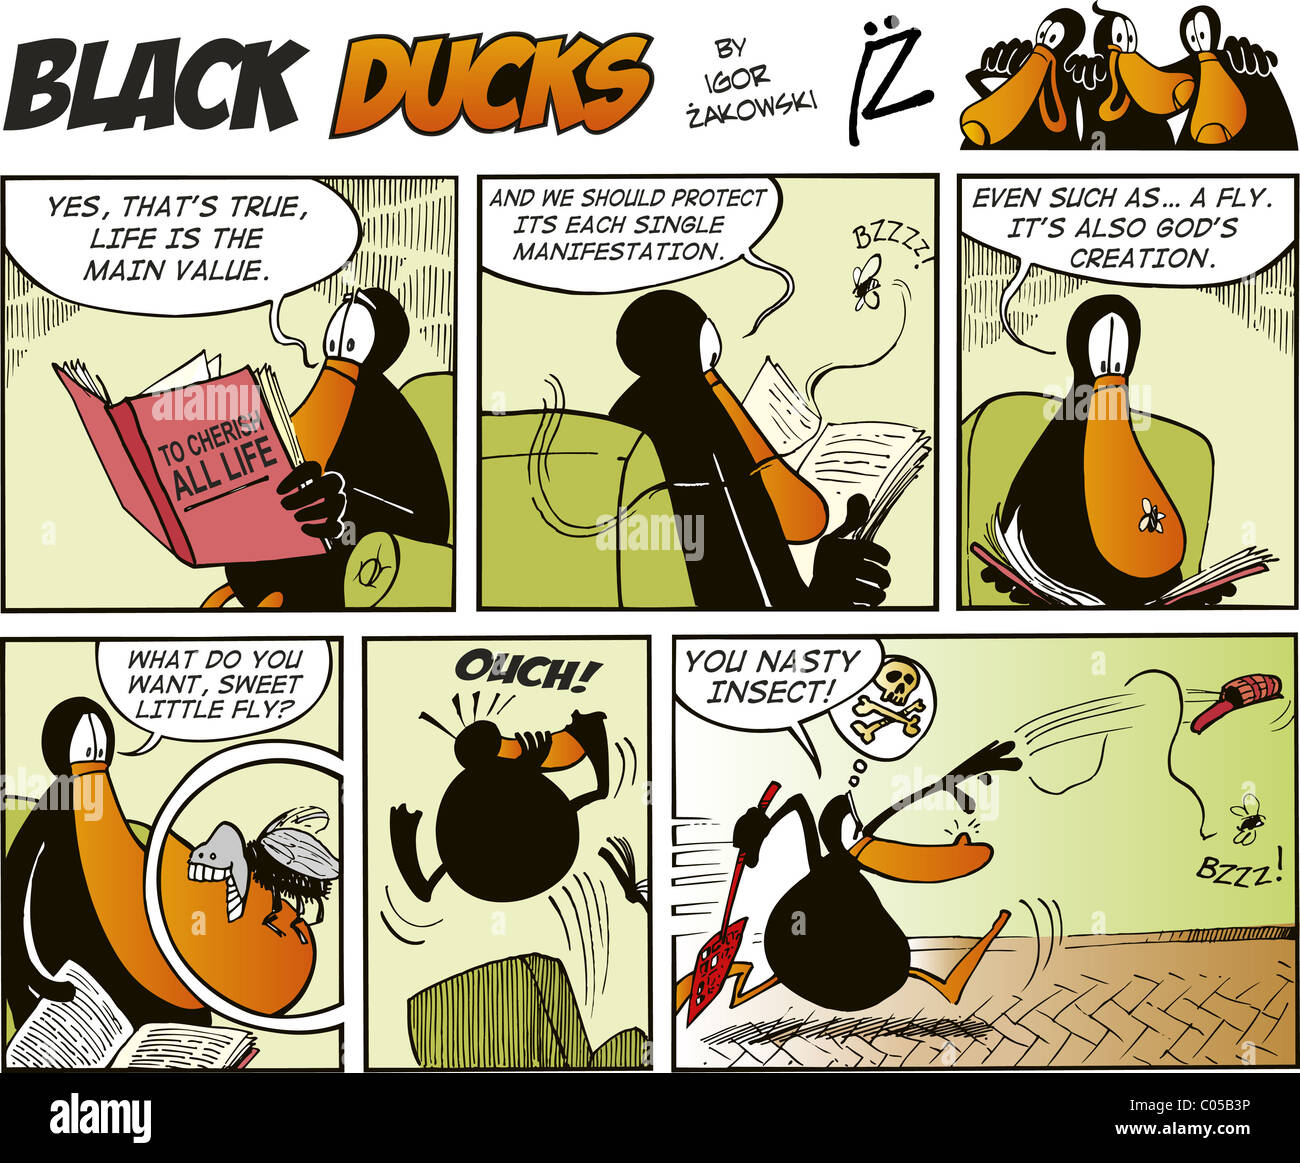 Black Ducks Comic Strip episode 36 Stock Photo